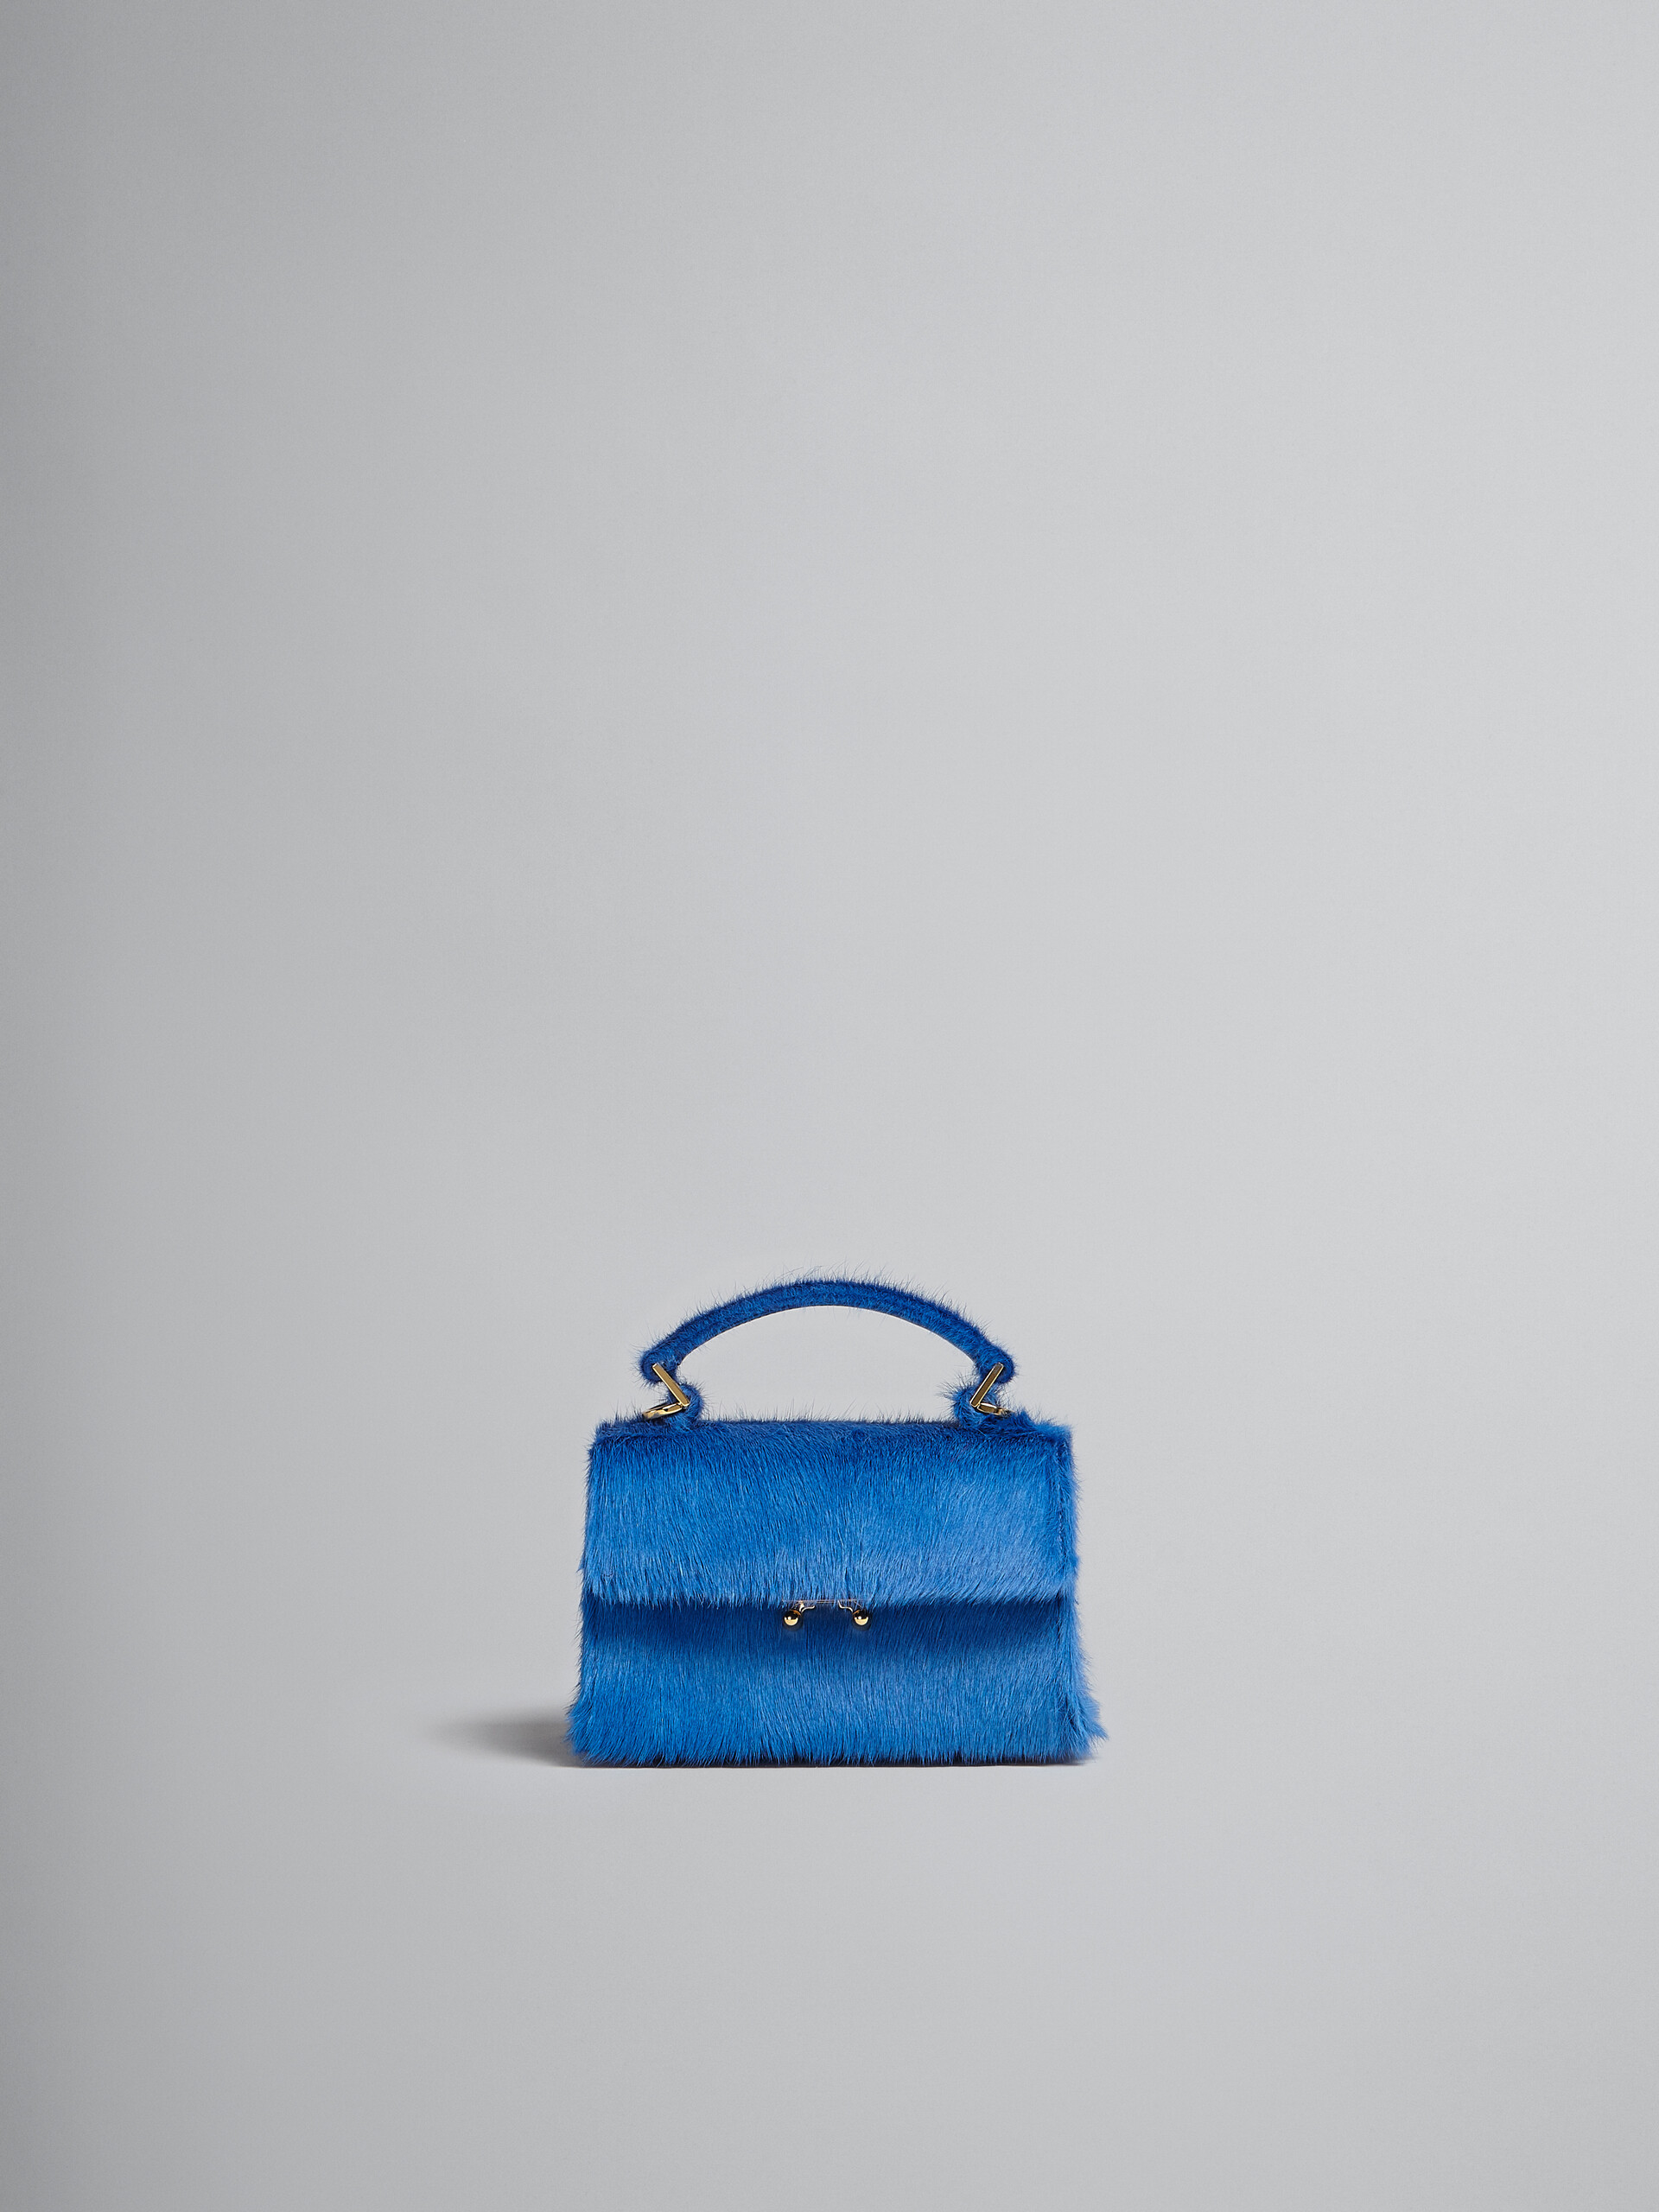 Relativity Mini Bag in blue long hair calfskin - Handbags - Image 1